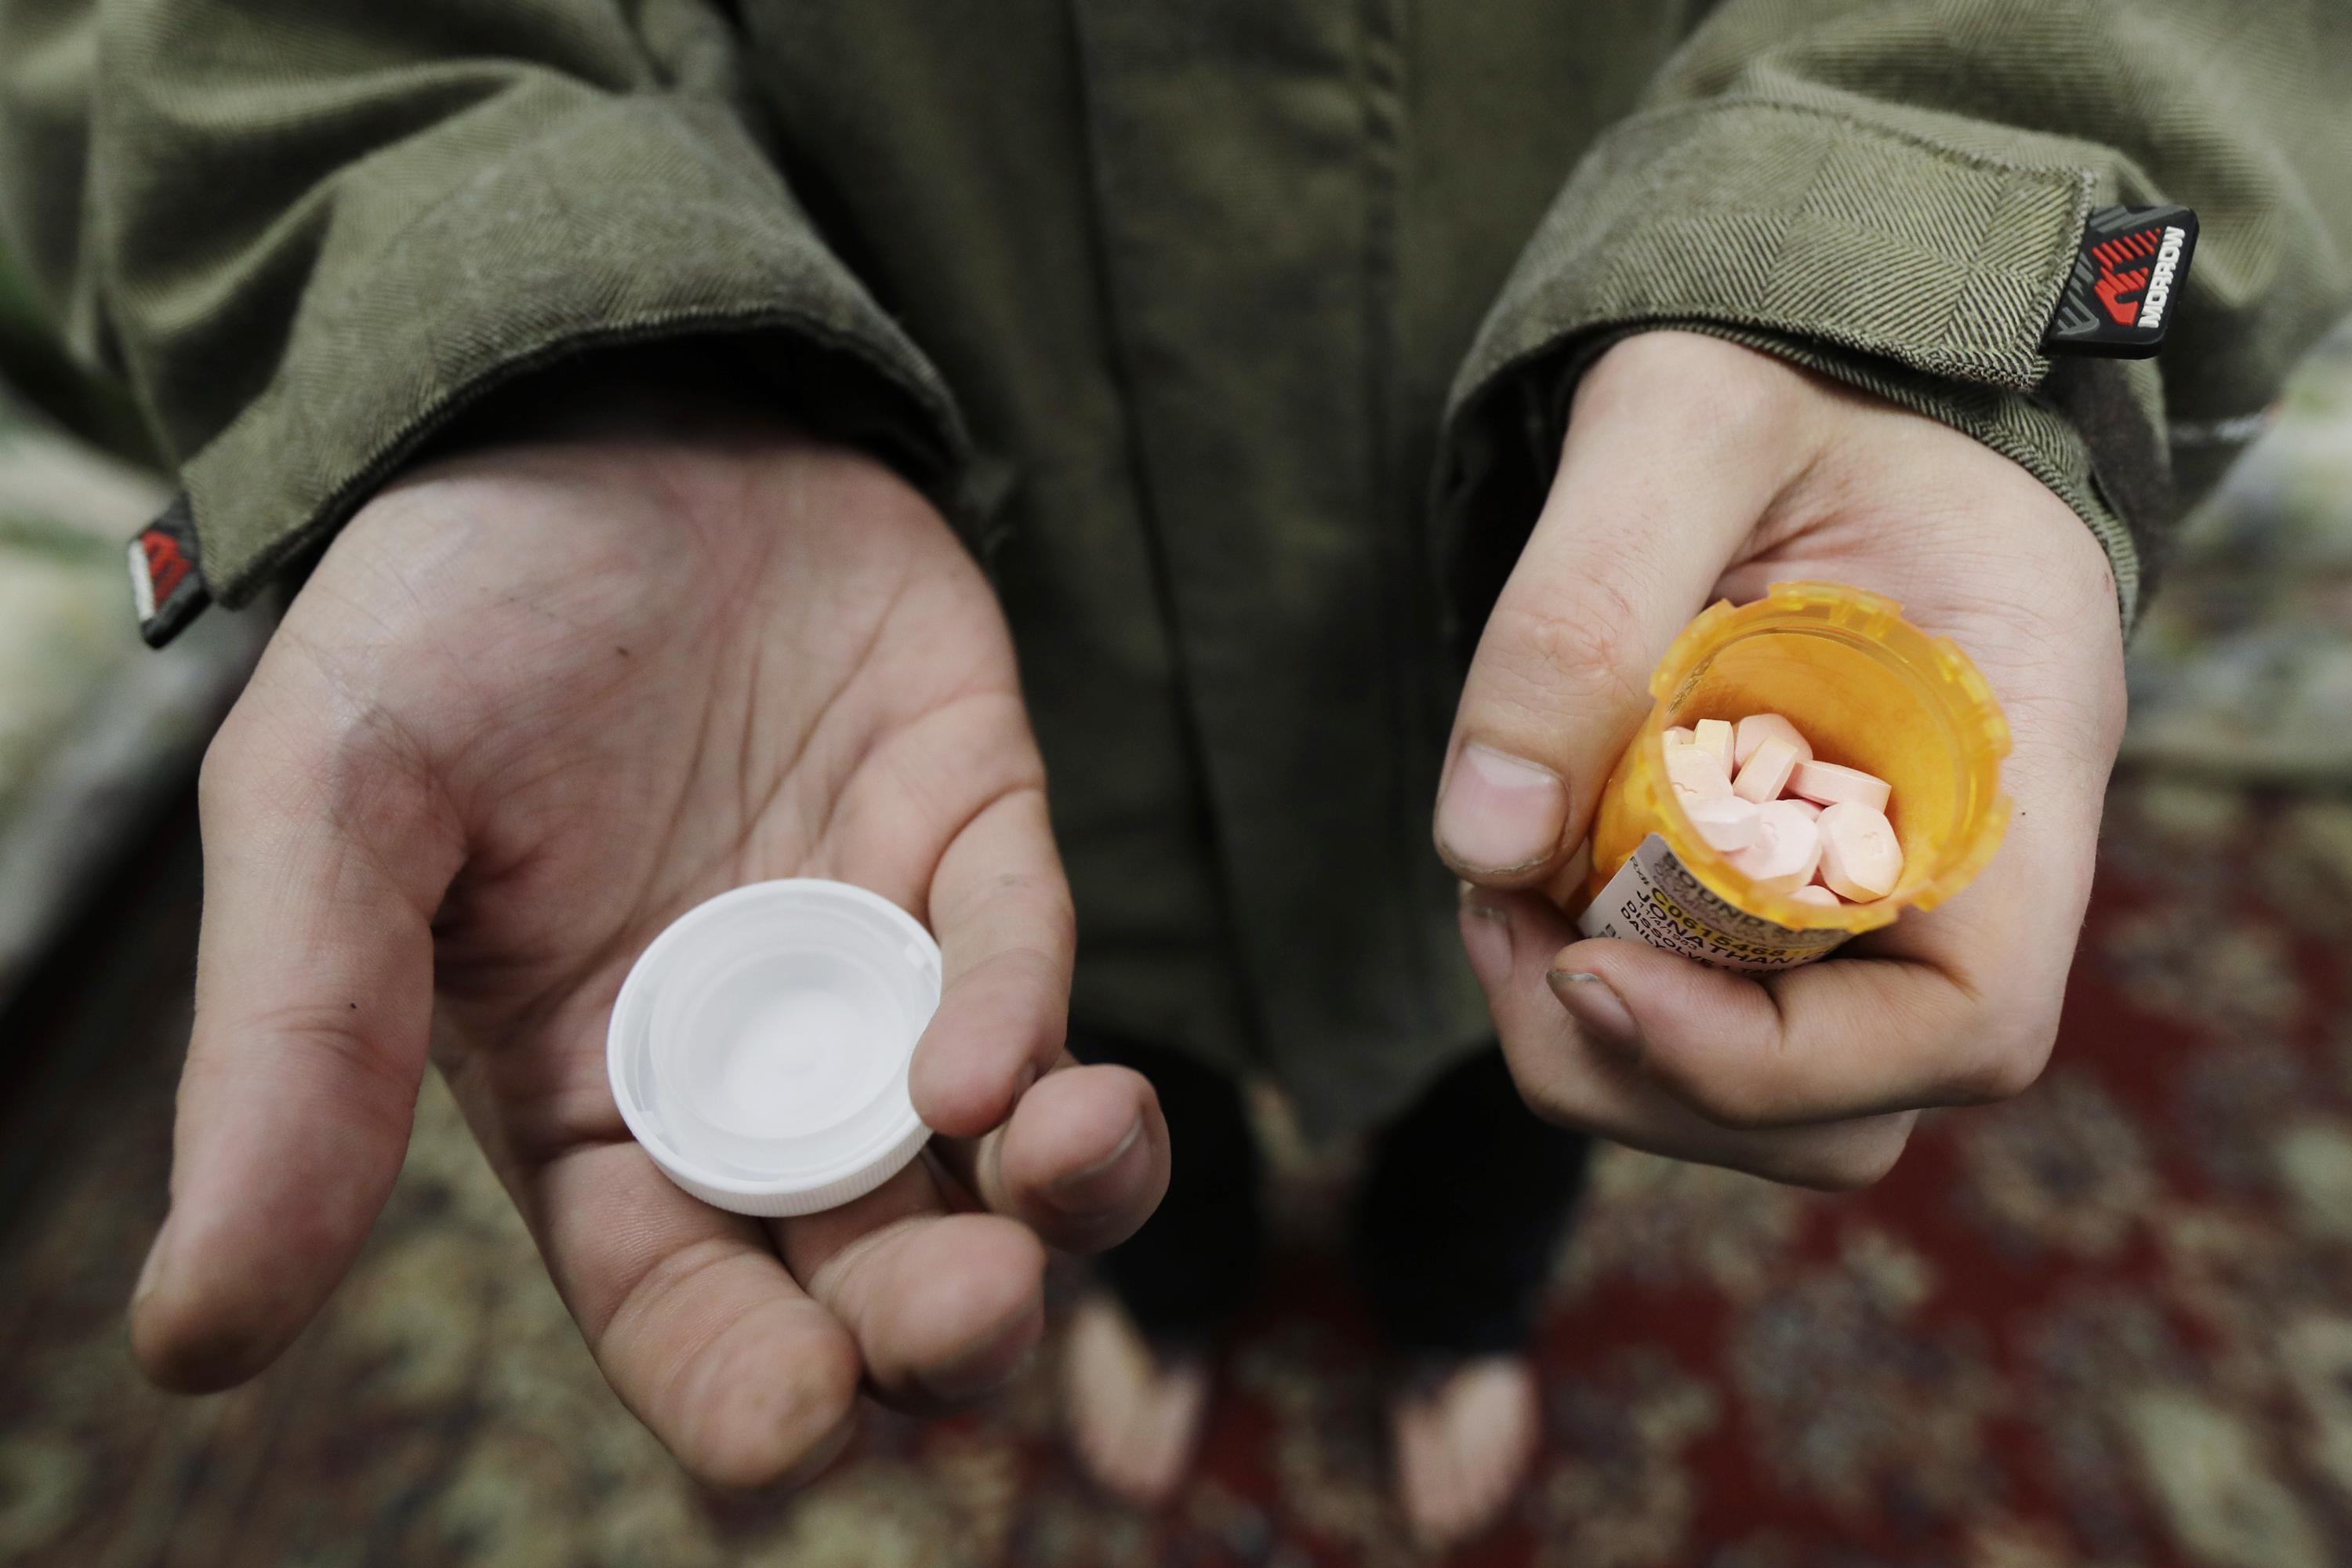 Treatment for opioid addiction often brings discrimination | AP News